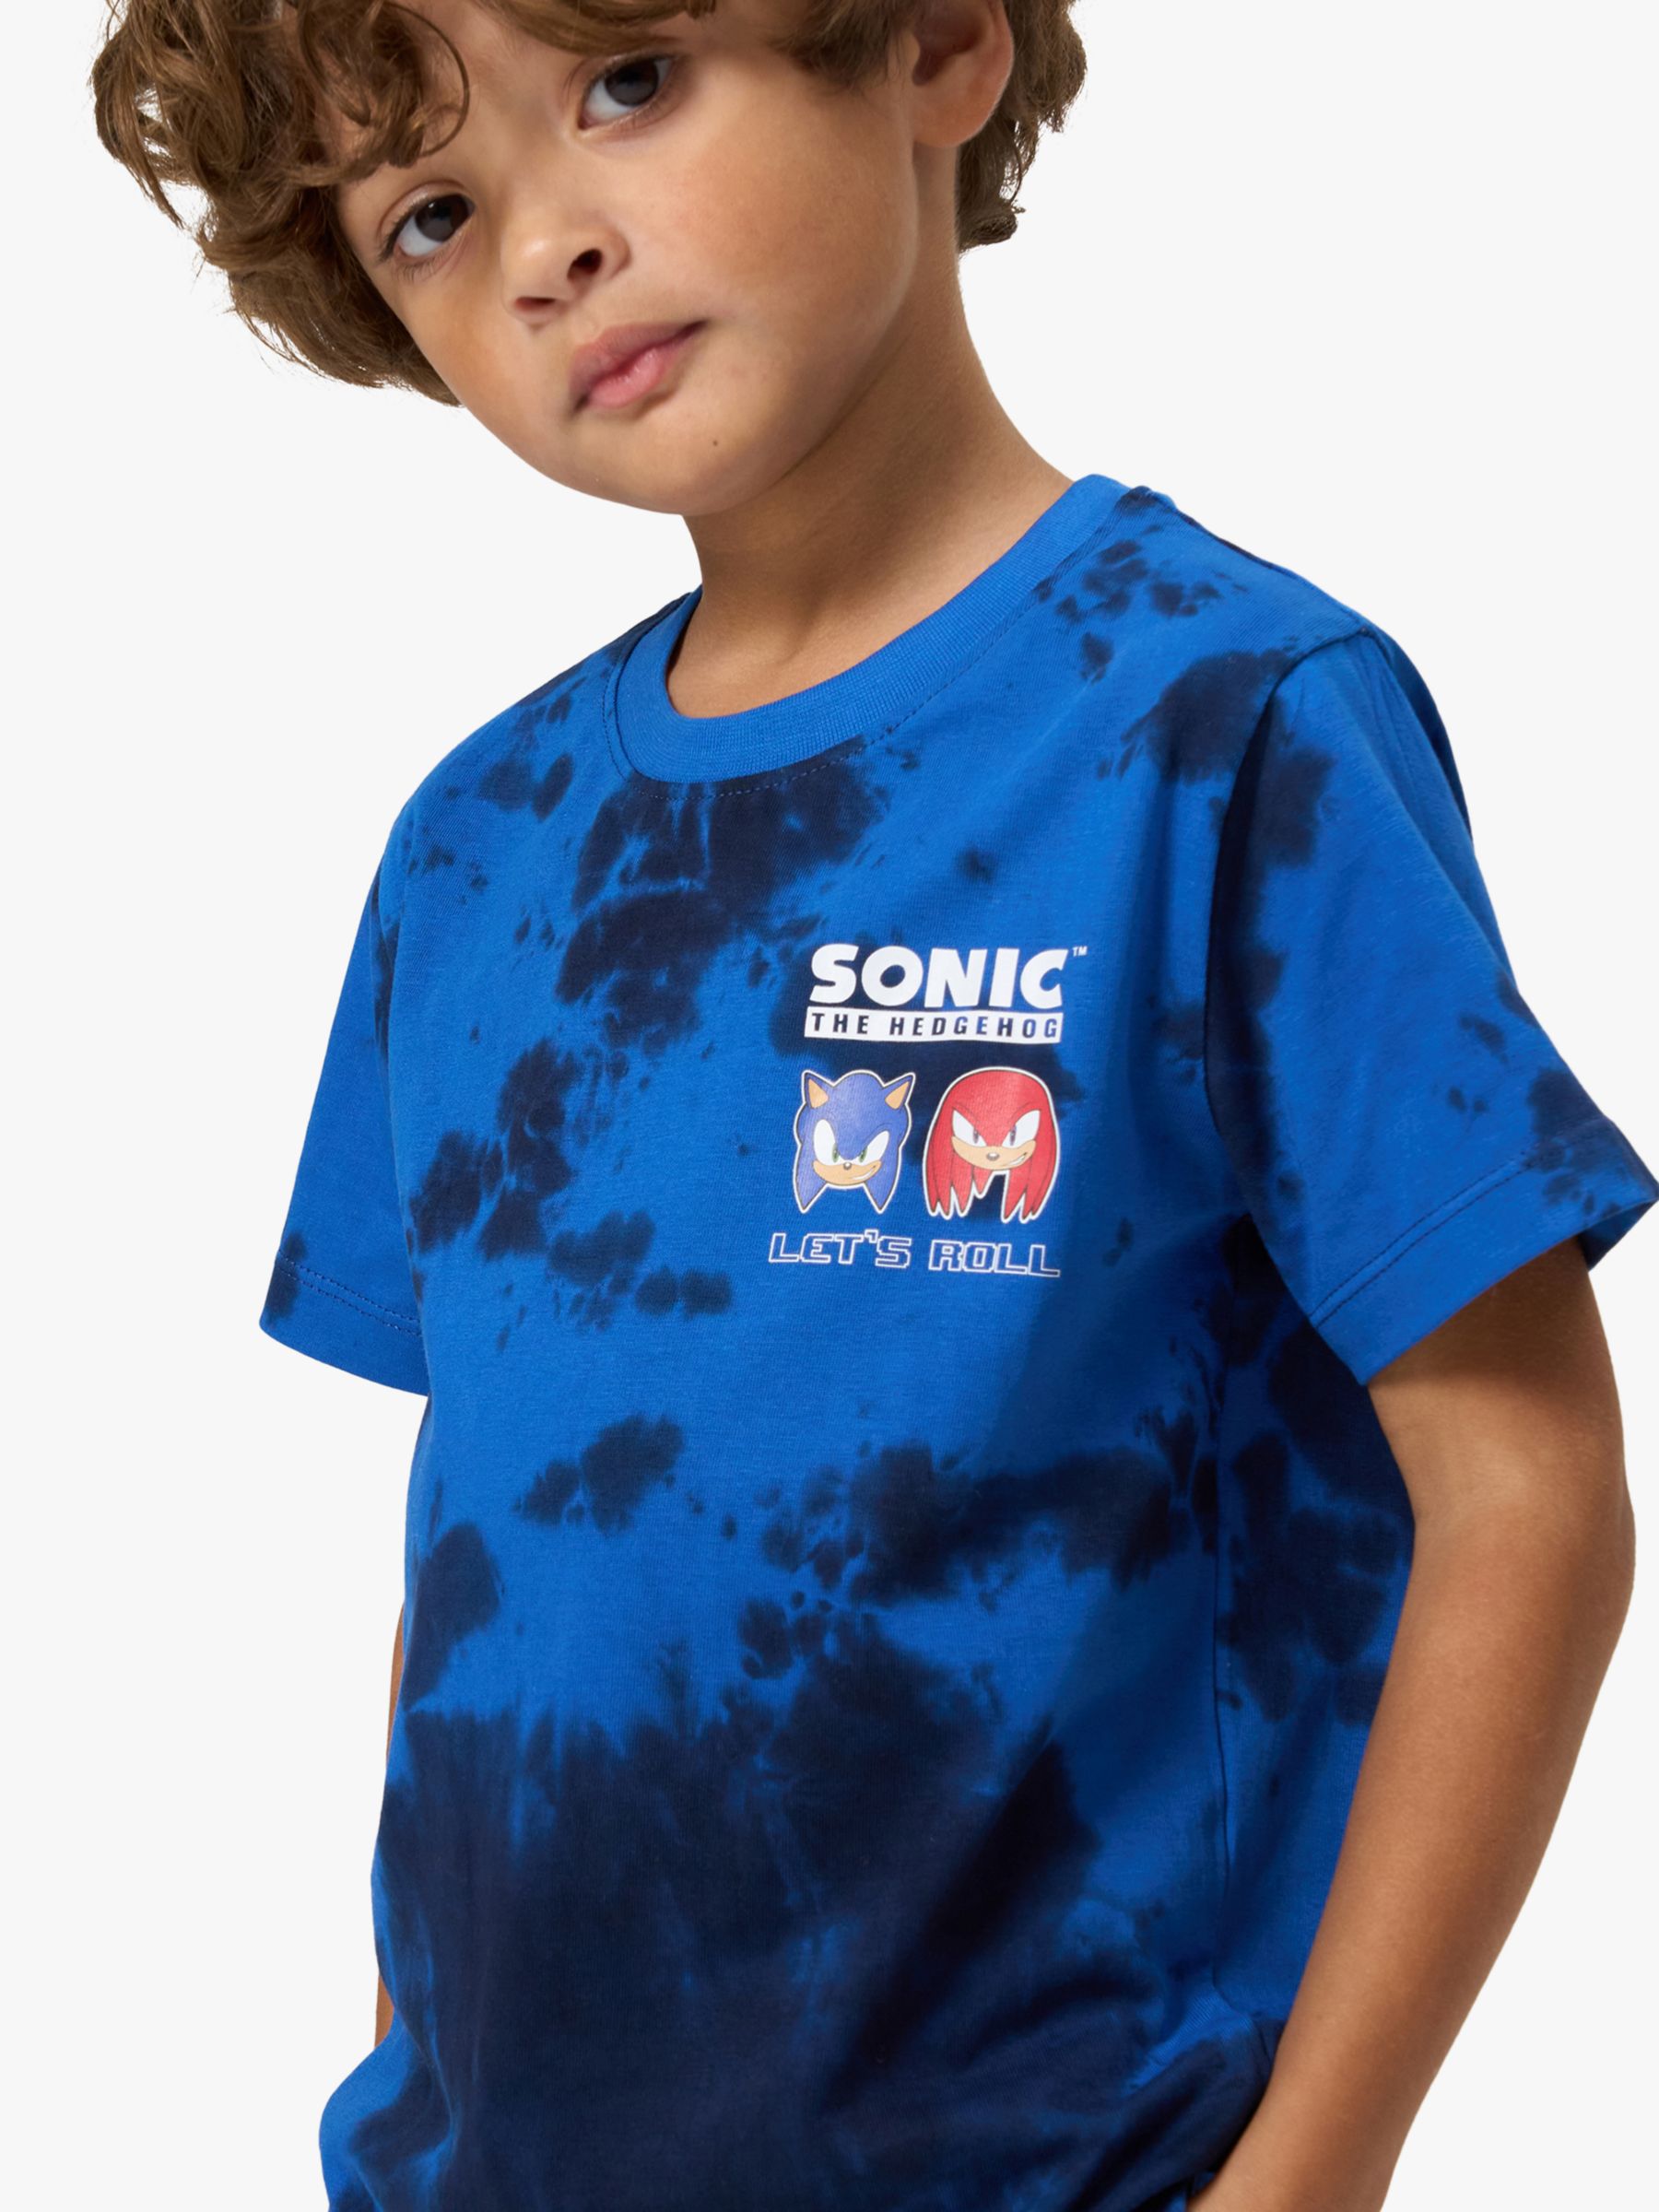 Buy Angel & Rocket Sonic the Hedgehog Graphic Tie Dye T-Shirt, Blue Online at johnlewis.com